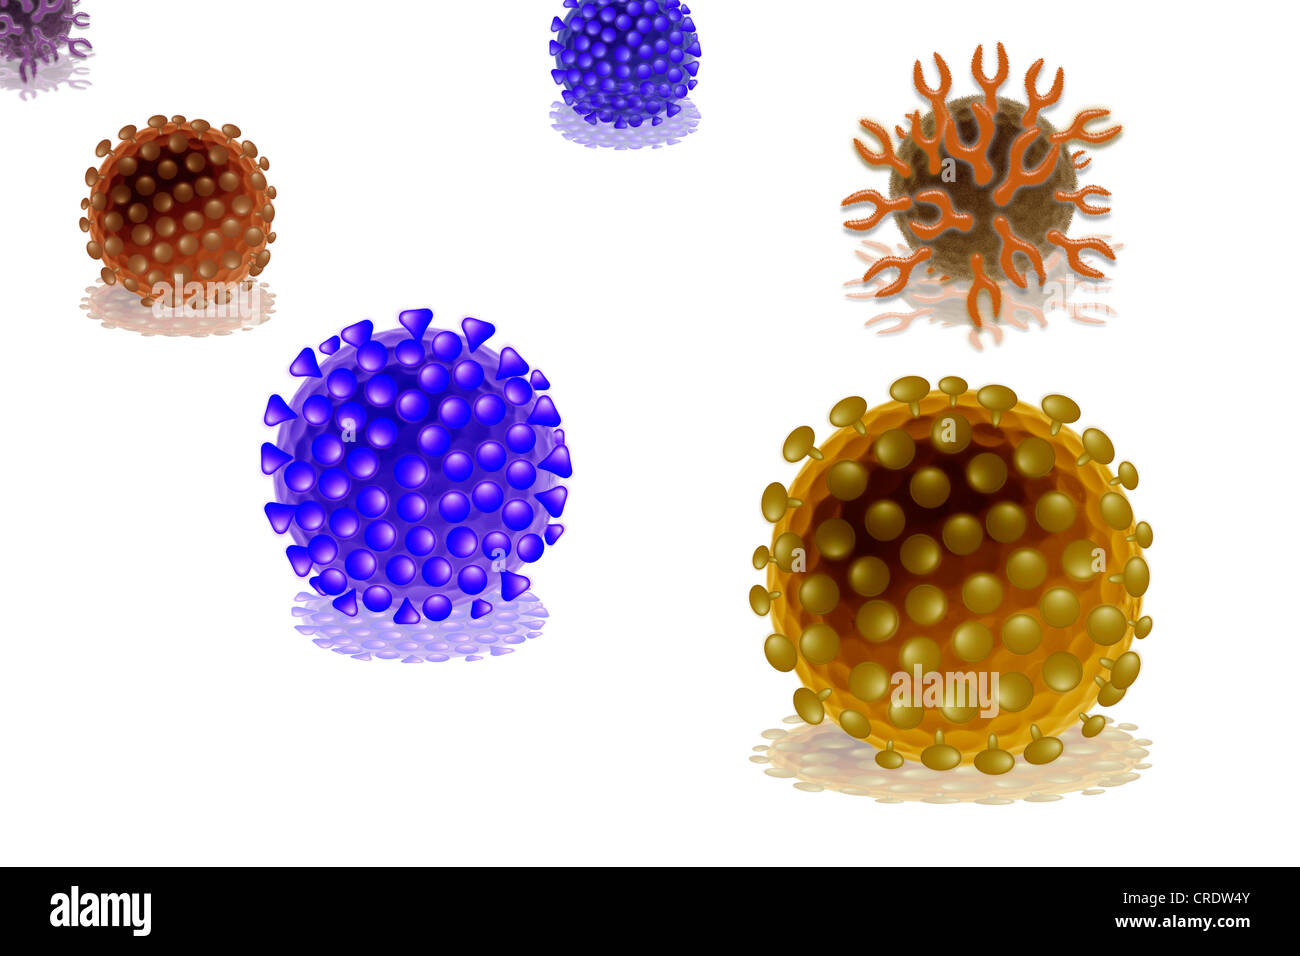 Viruses, scienceart, illustration Stock Photo